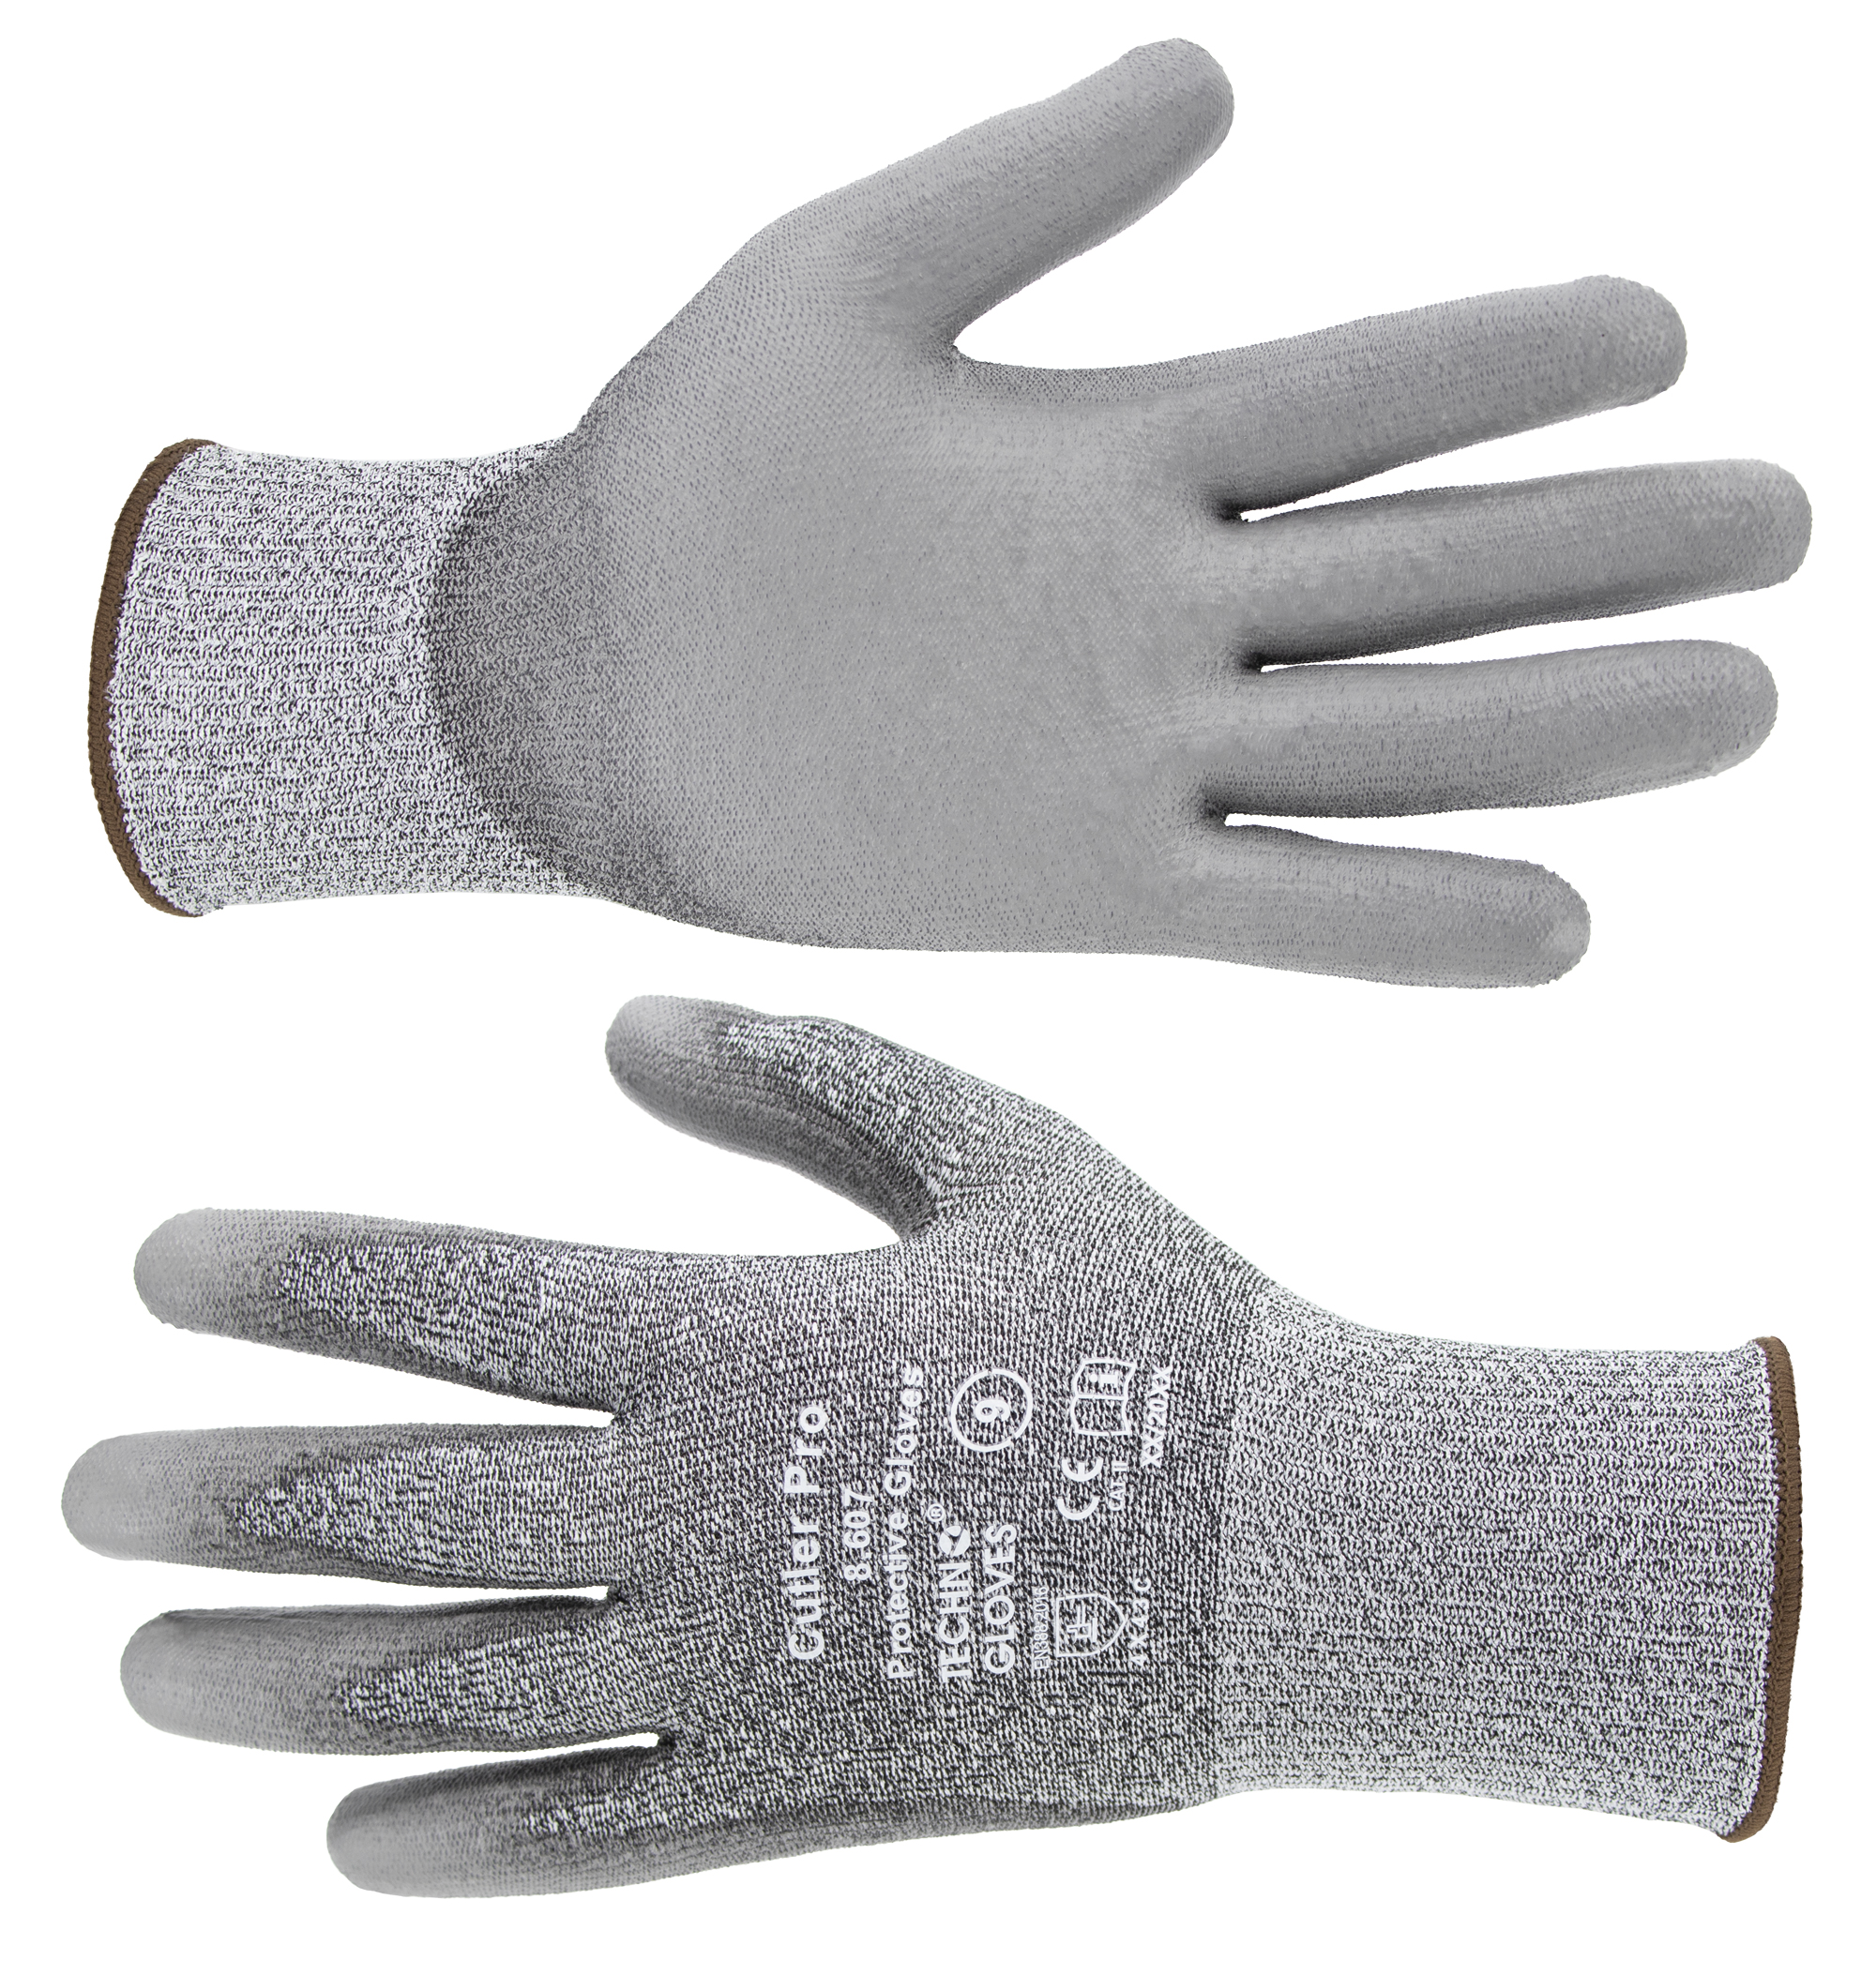 Cut Level 5 Gloves